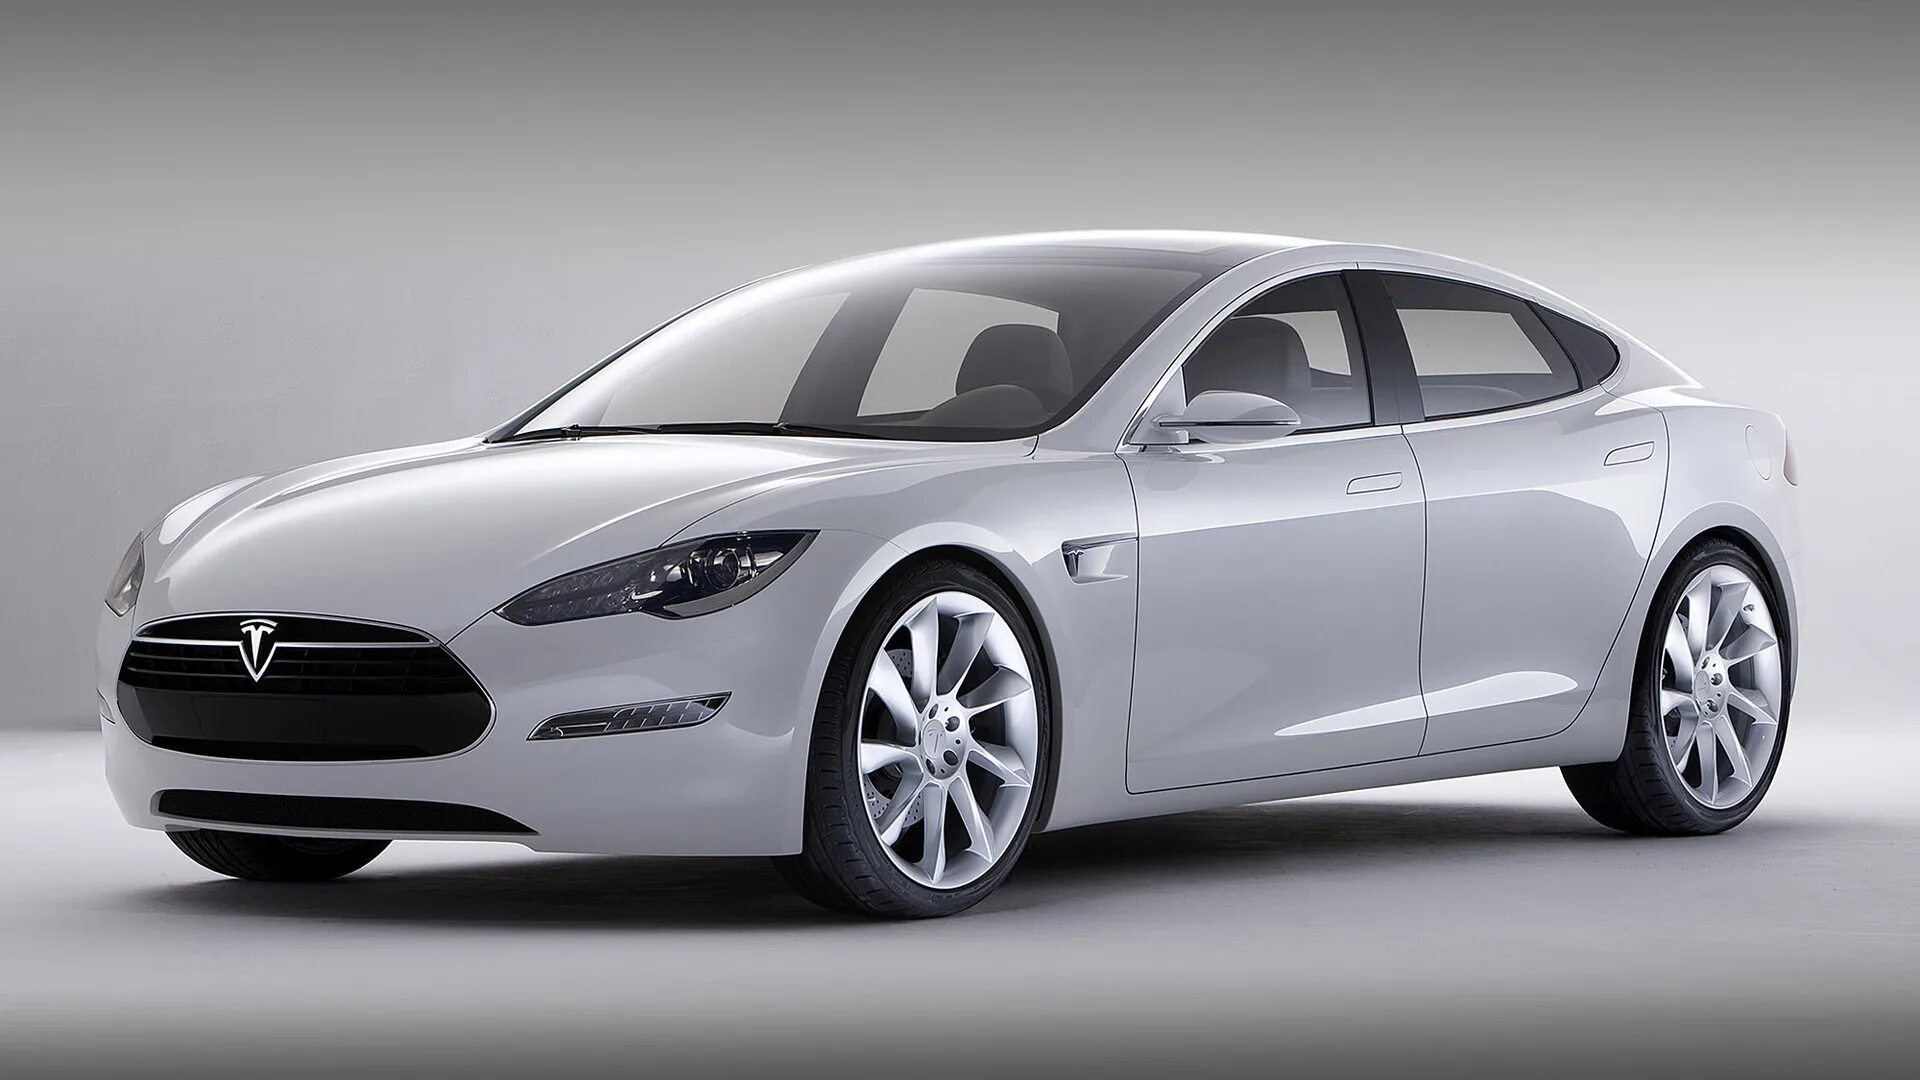 Автомобиль s. Машина Tesla model s. Электромобиль Тесла. Tesla седан model s. Электрокар Tesla model s.